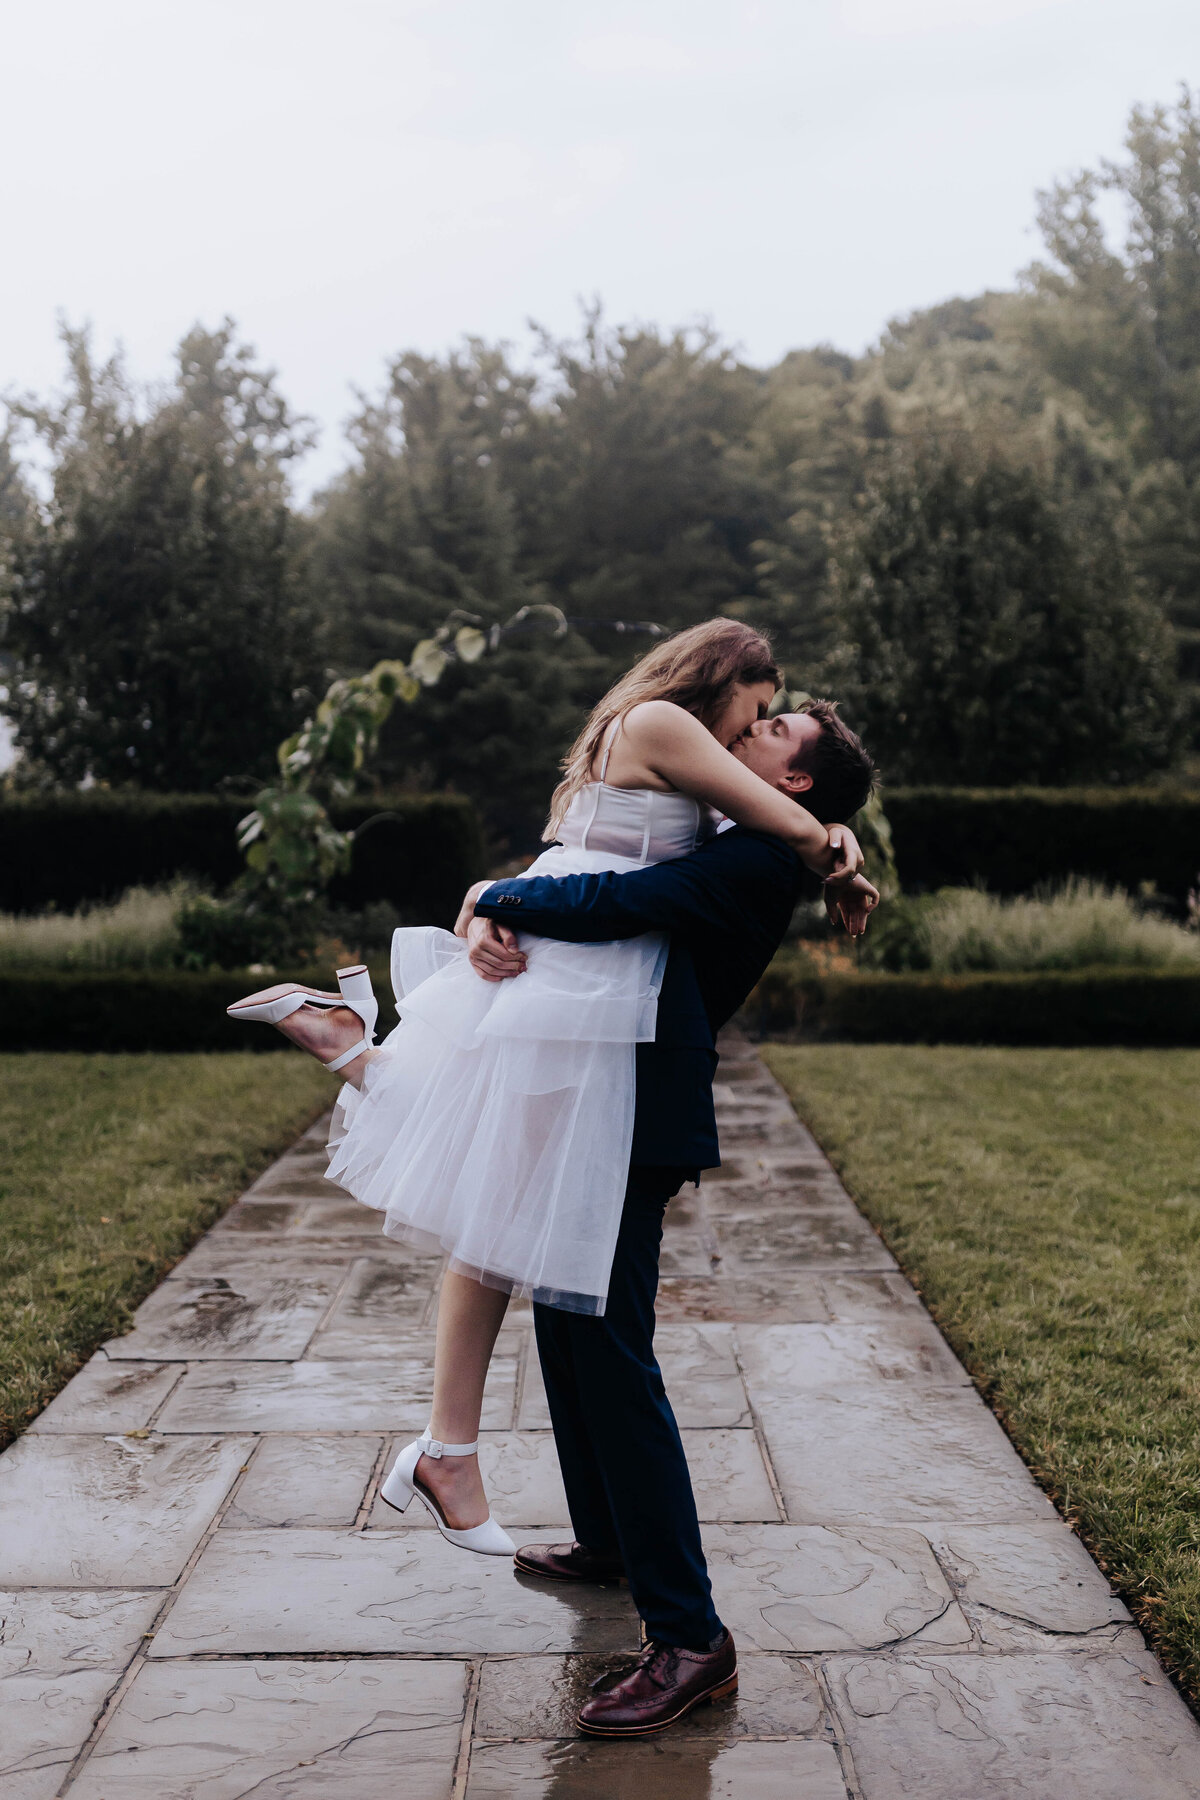 Destination elopement photographer captures bride and groom hugging after elopement